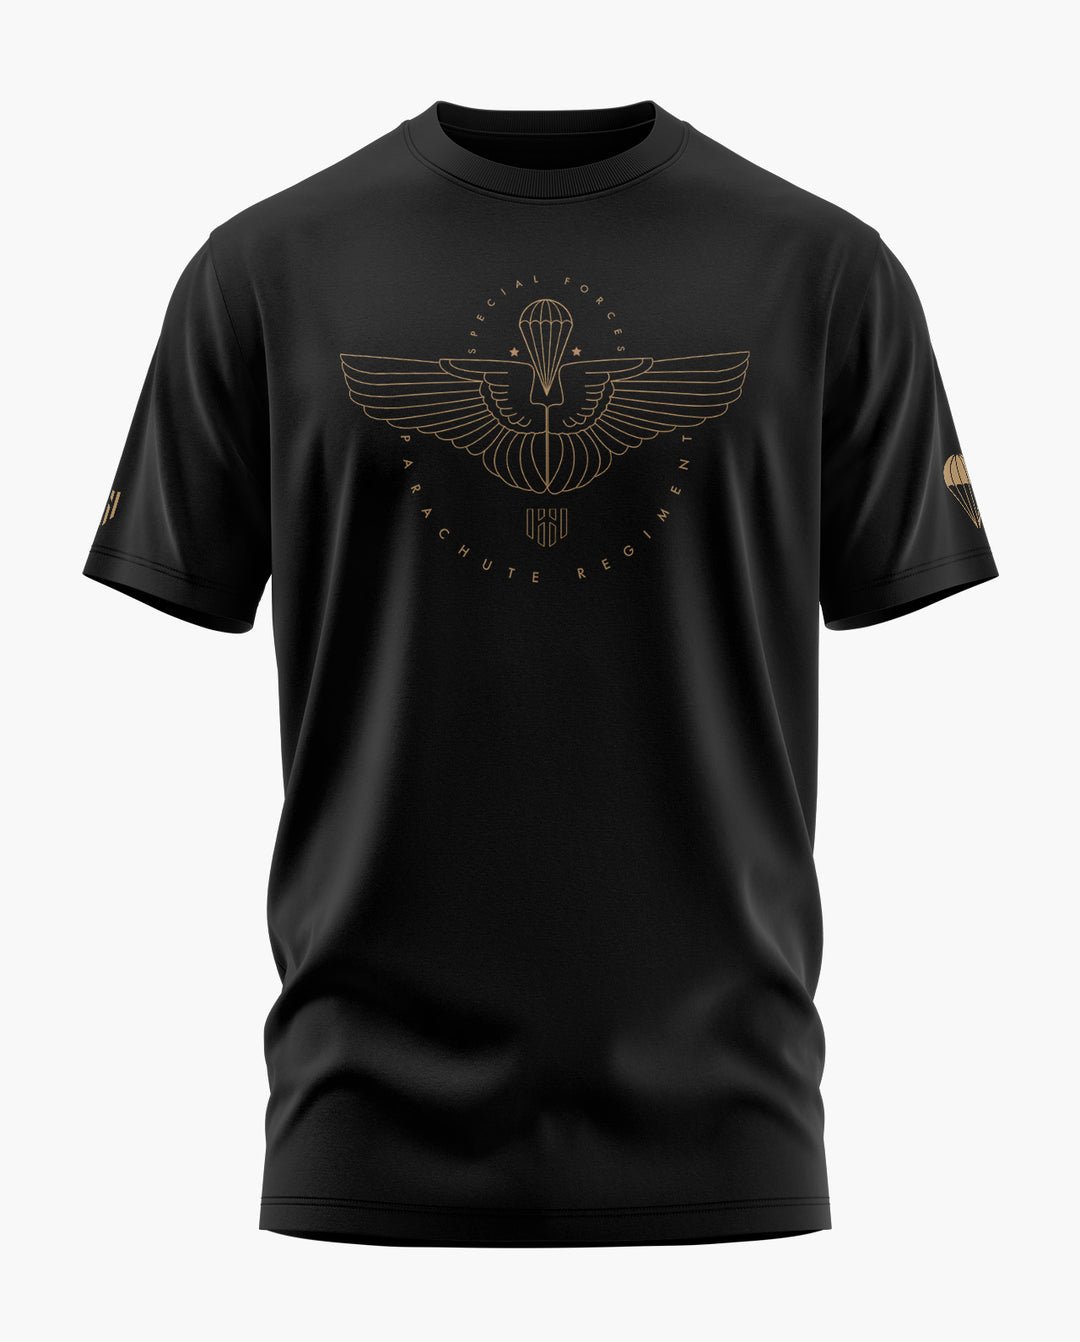 Parachute Regiment SPECIAL EDITION T-Shirt - Aero Armour